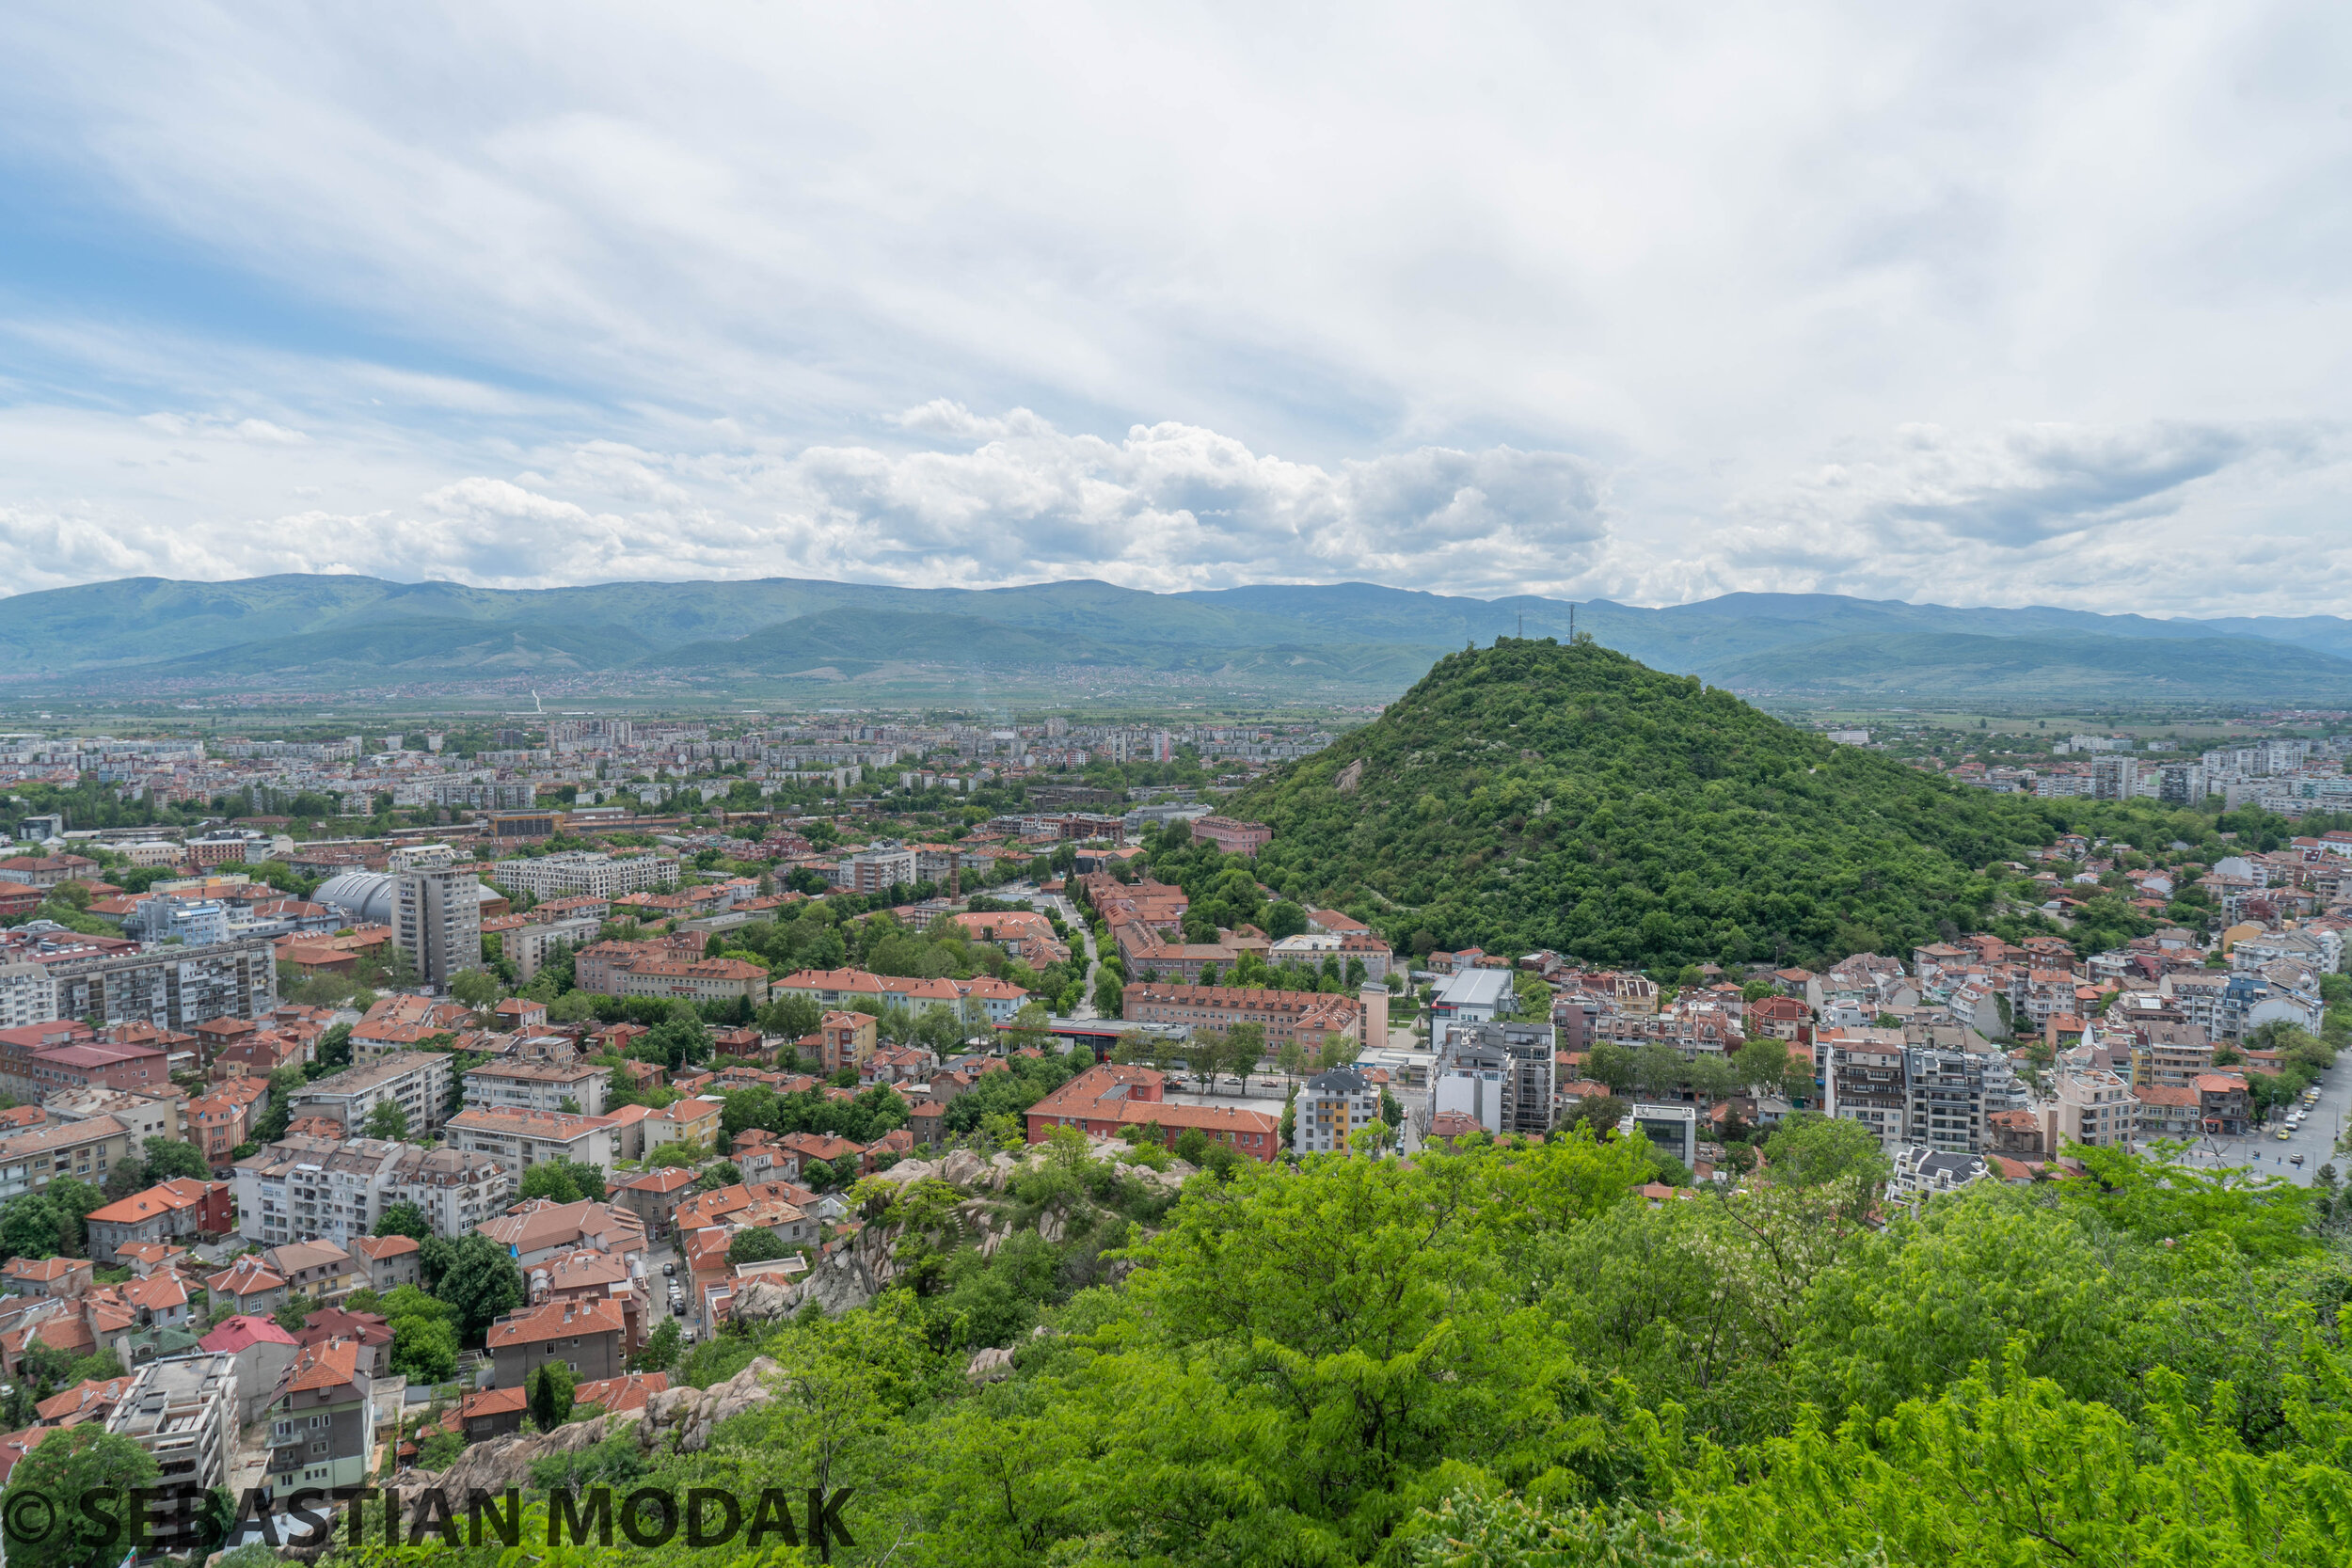  Plovdiv, Bulgaria 